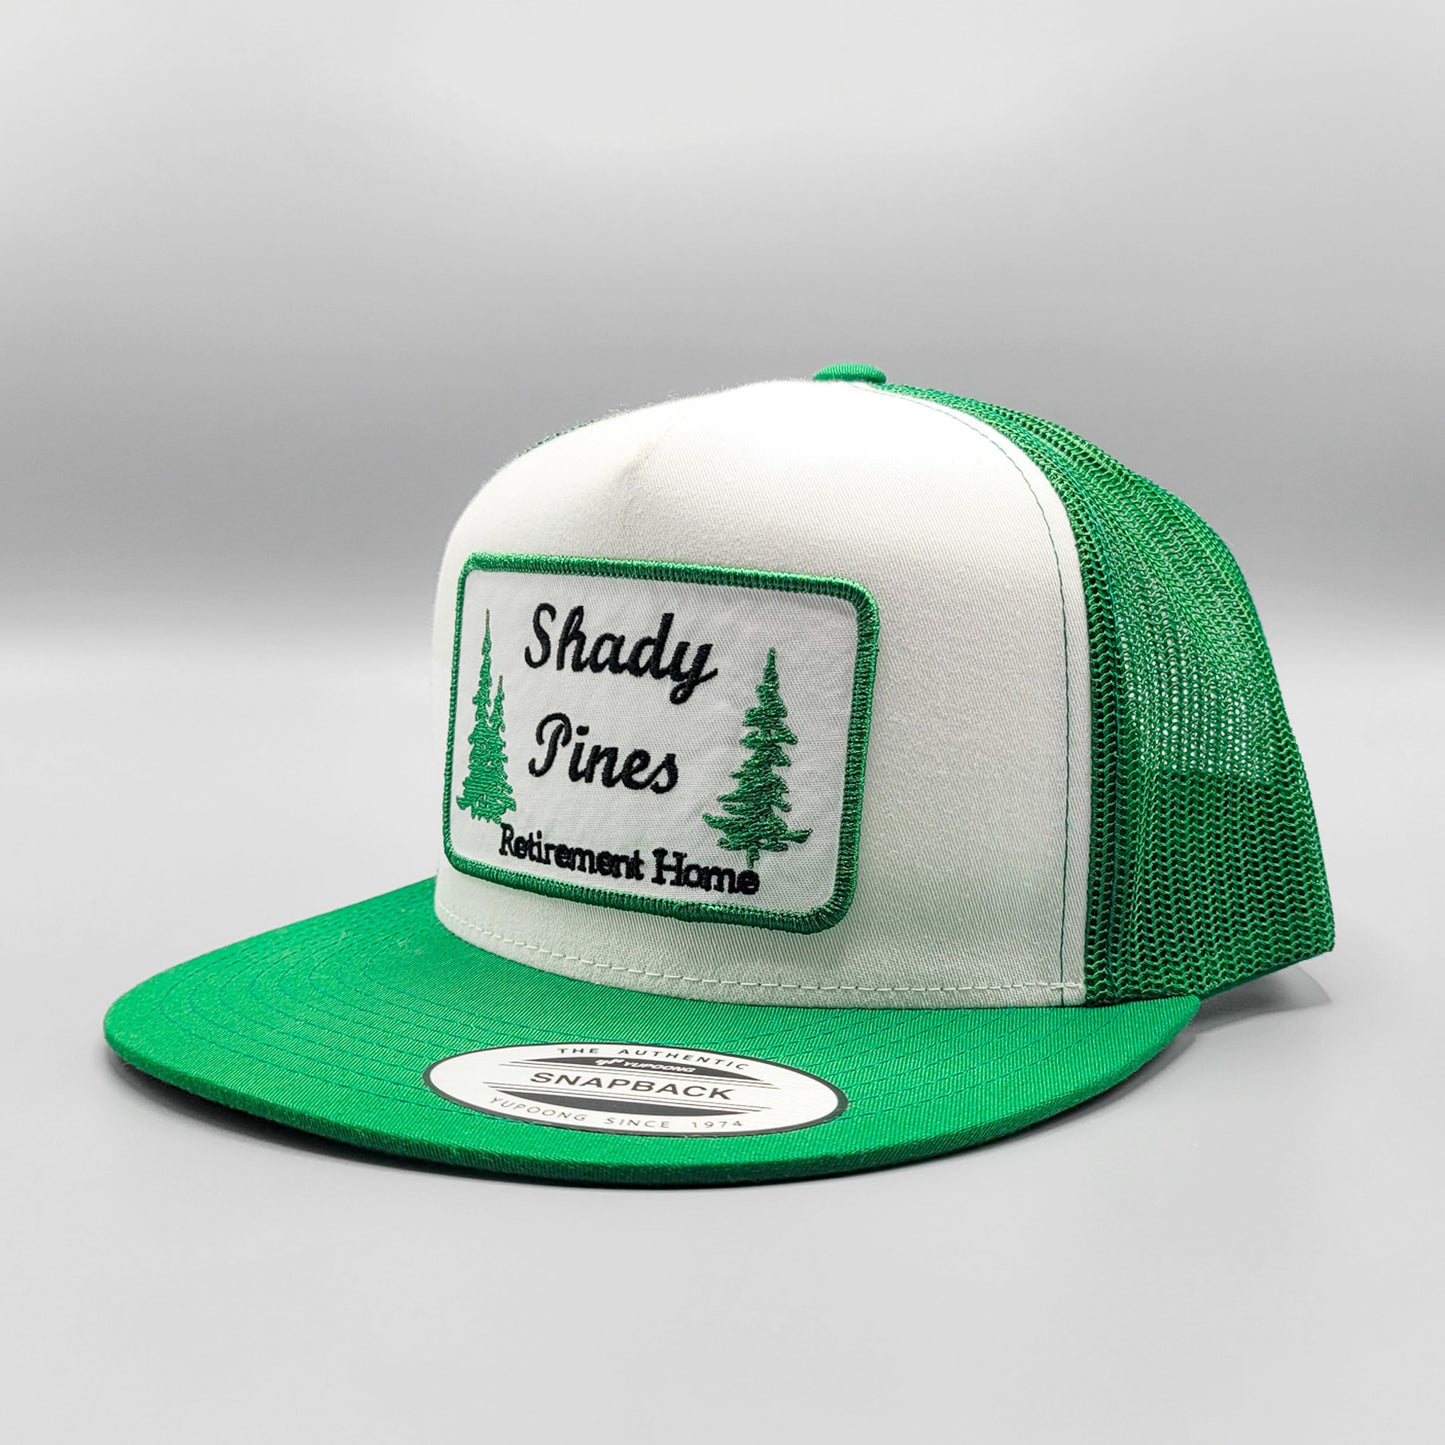 Shady Pines Golden Girls 80's TV Show Retirement Home Trucker Hat